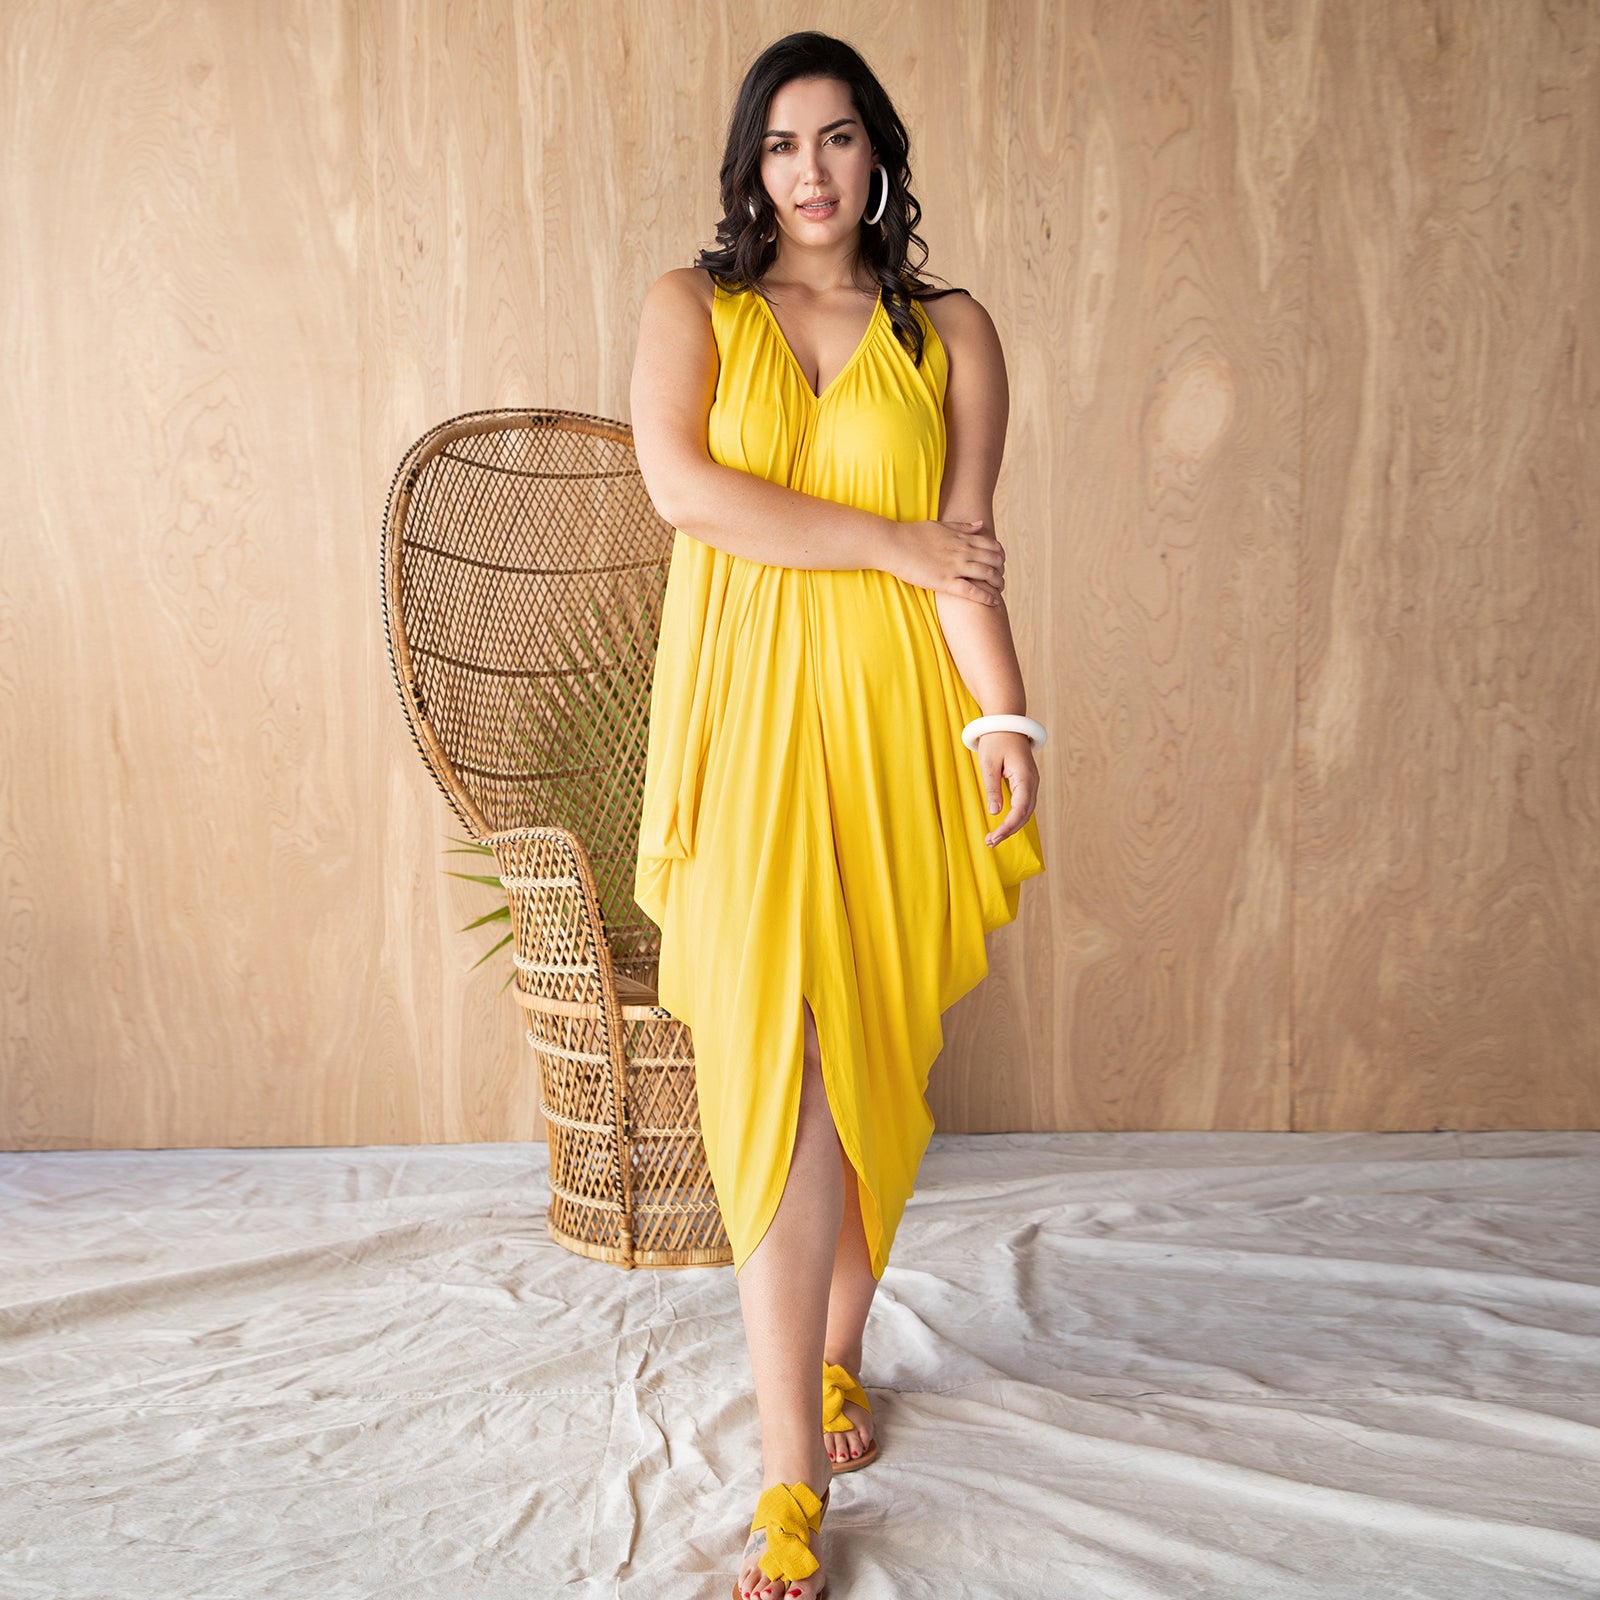 Stylish And Colorful Midi Dresses For Women Trina Turk 